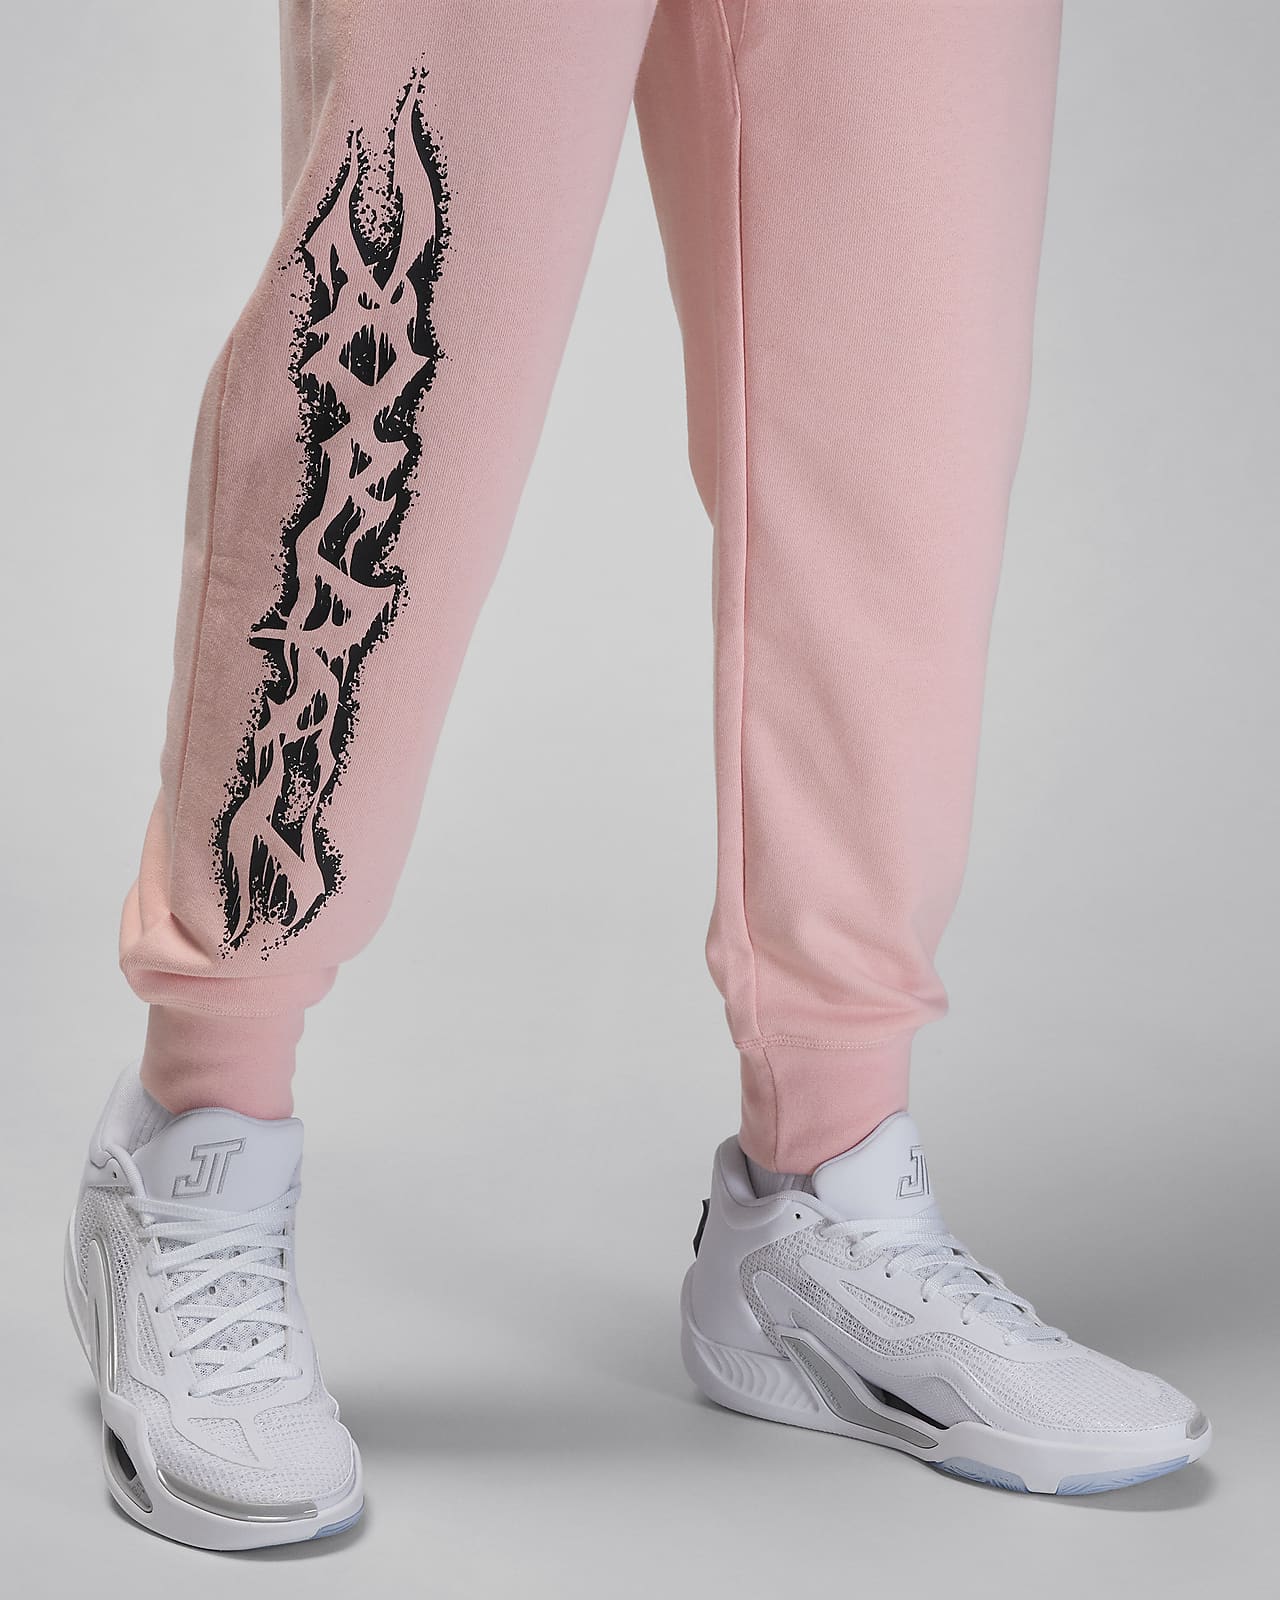 Hommes Sportswear Pantalons et collants. Nike CA